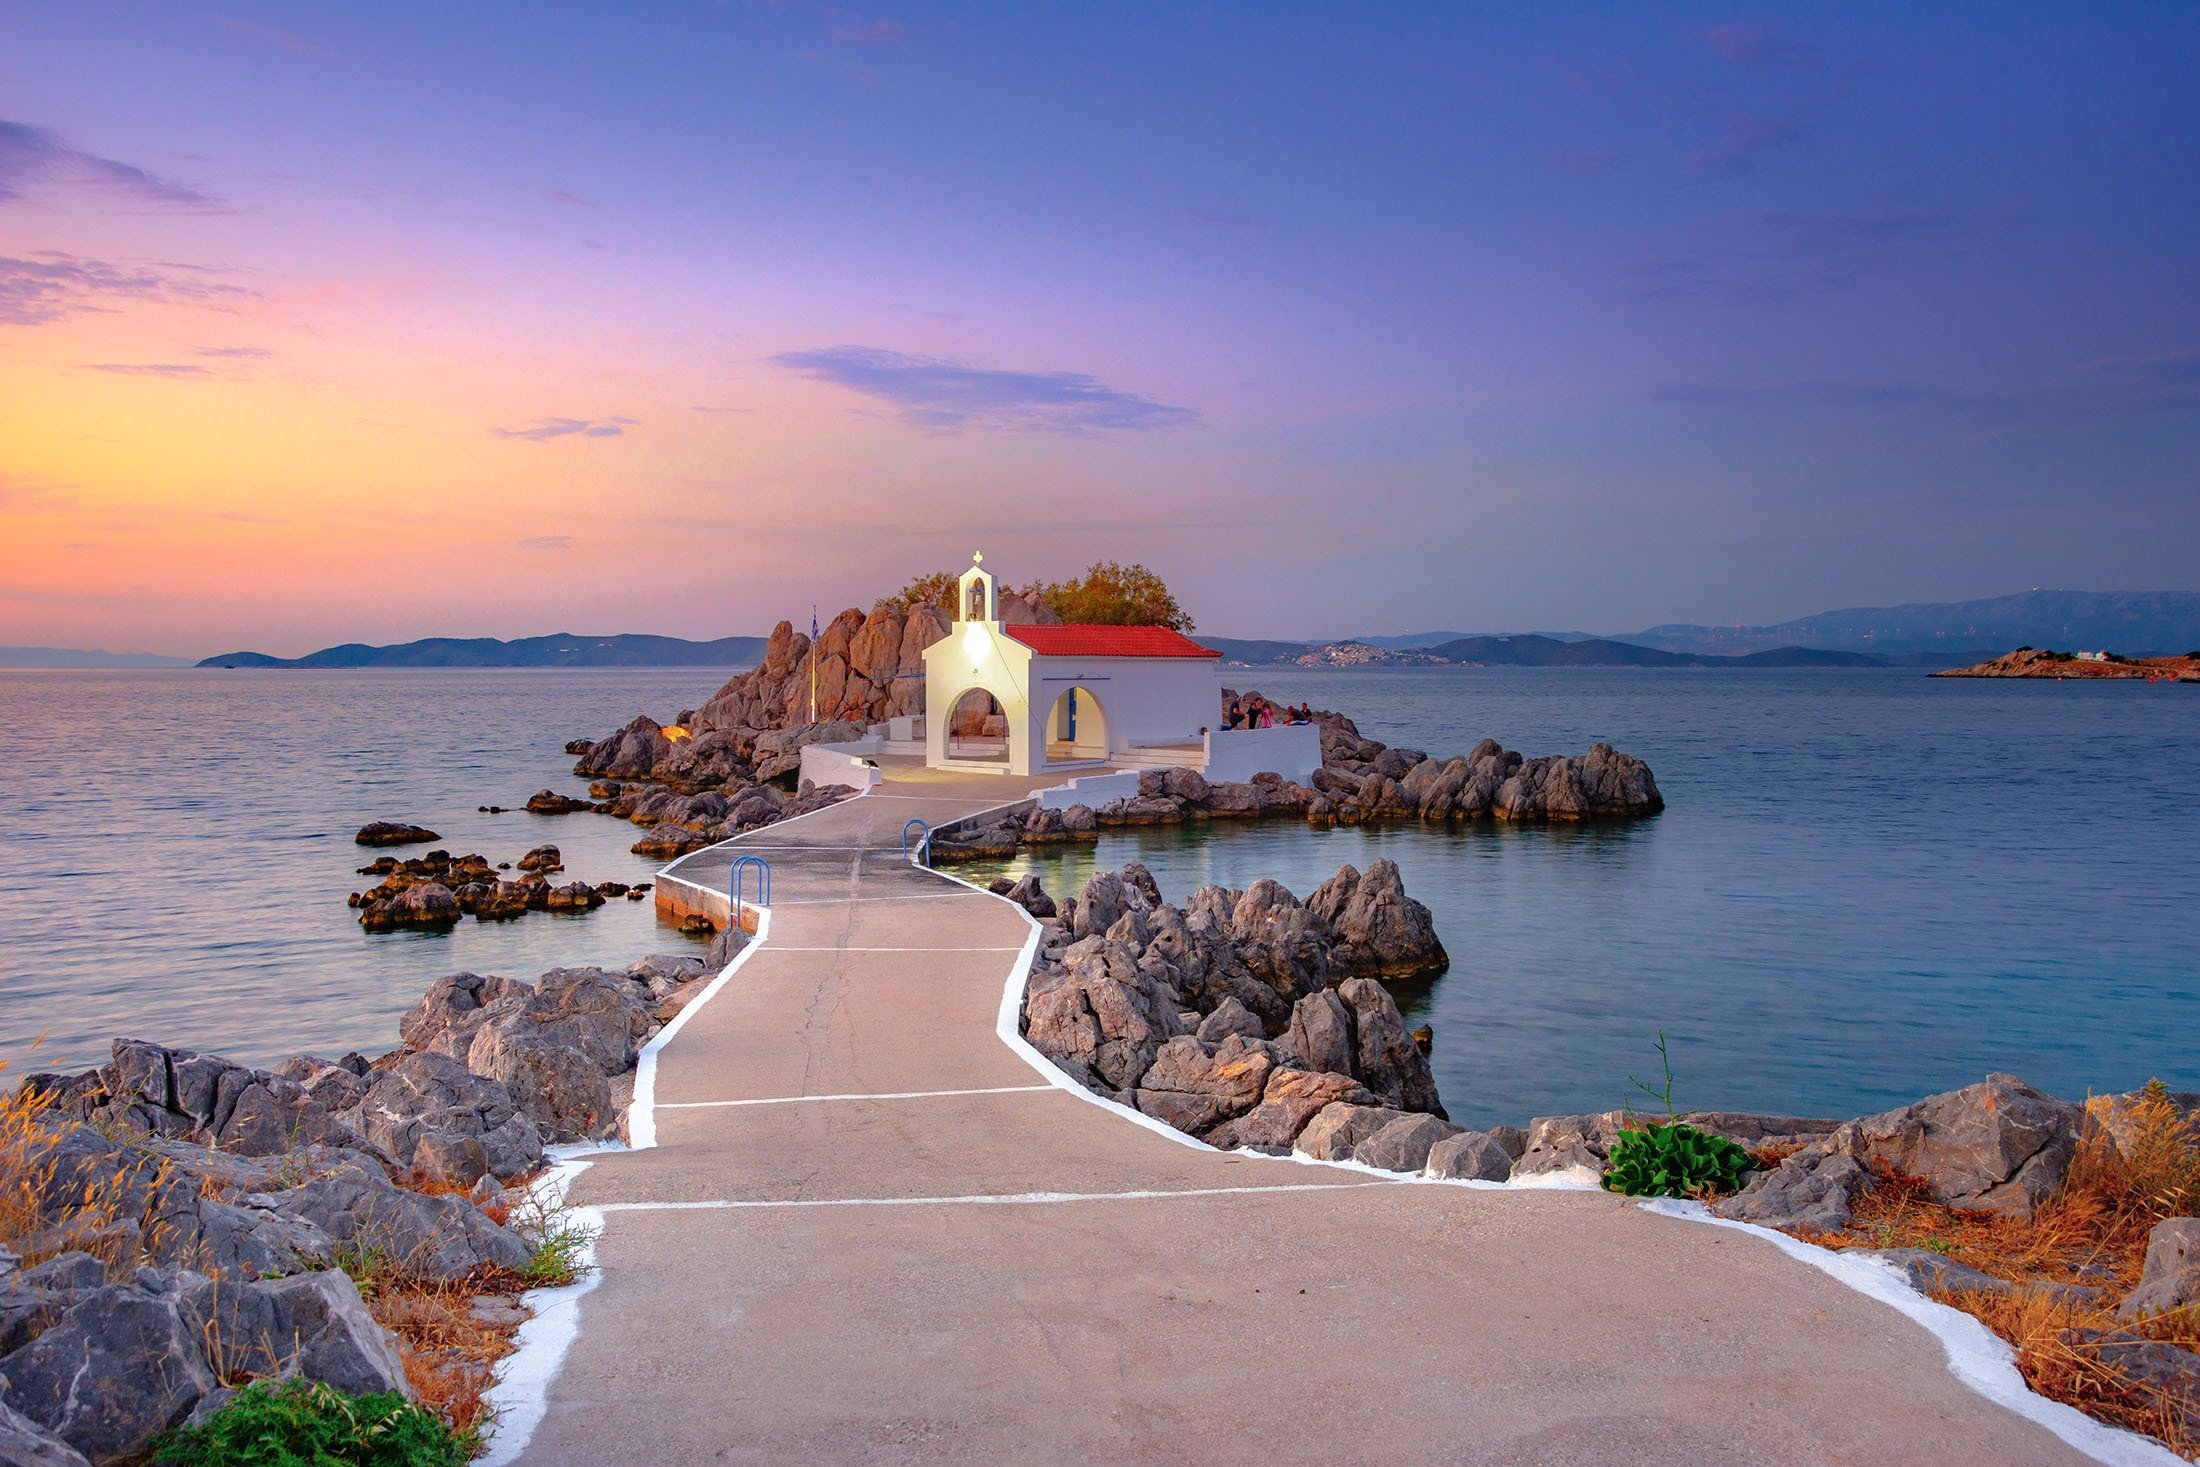 Jika mengunjungi Chios, jangan tinggalkan pulau tanpa melihat bangunan bersejarahnya yang megah.  (Foto Shutterstock)